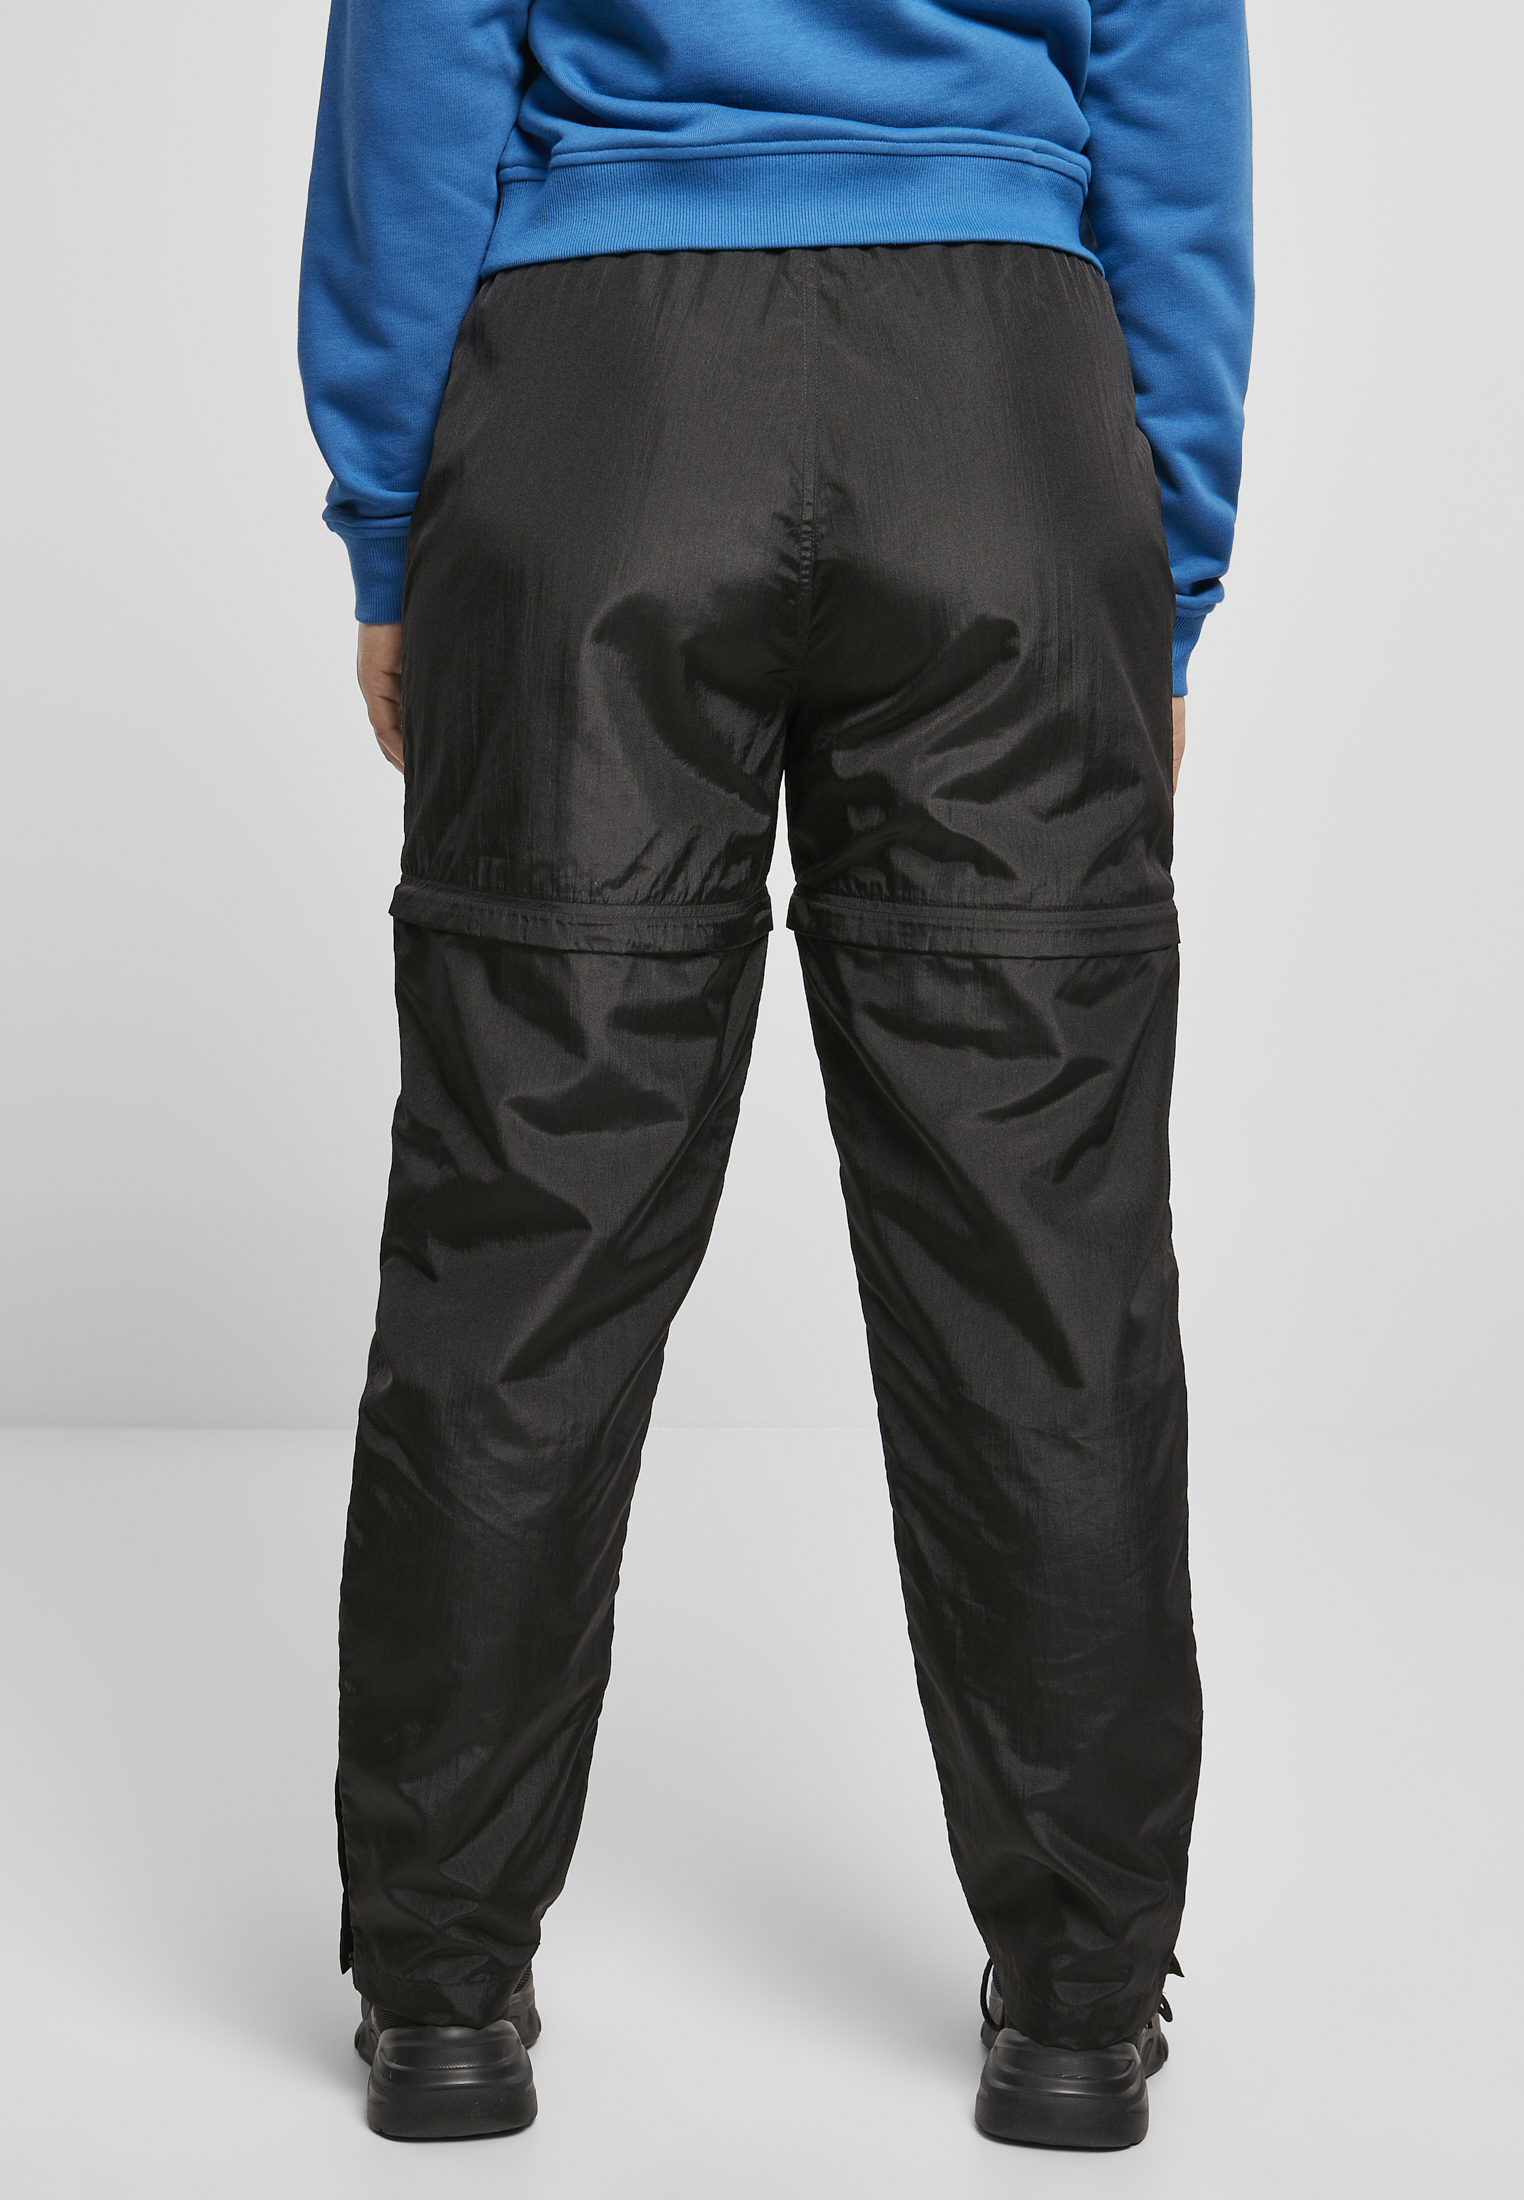 Hosen Ladies Shiny Crinkle Nylon Zip Pants in Farbe black